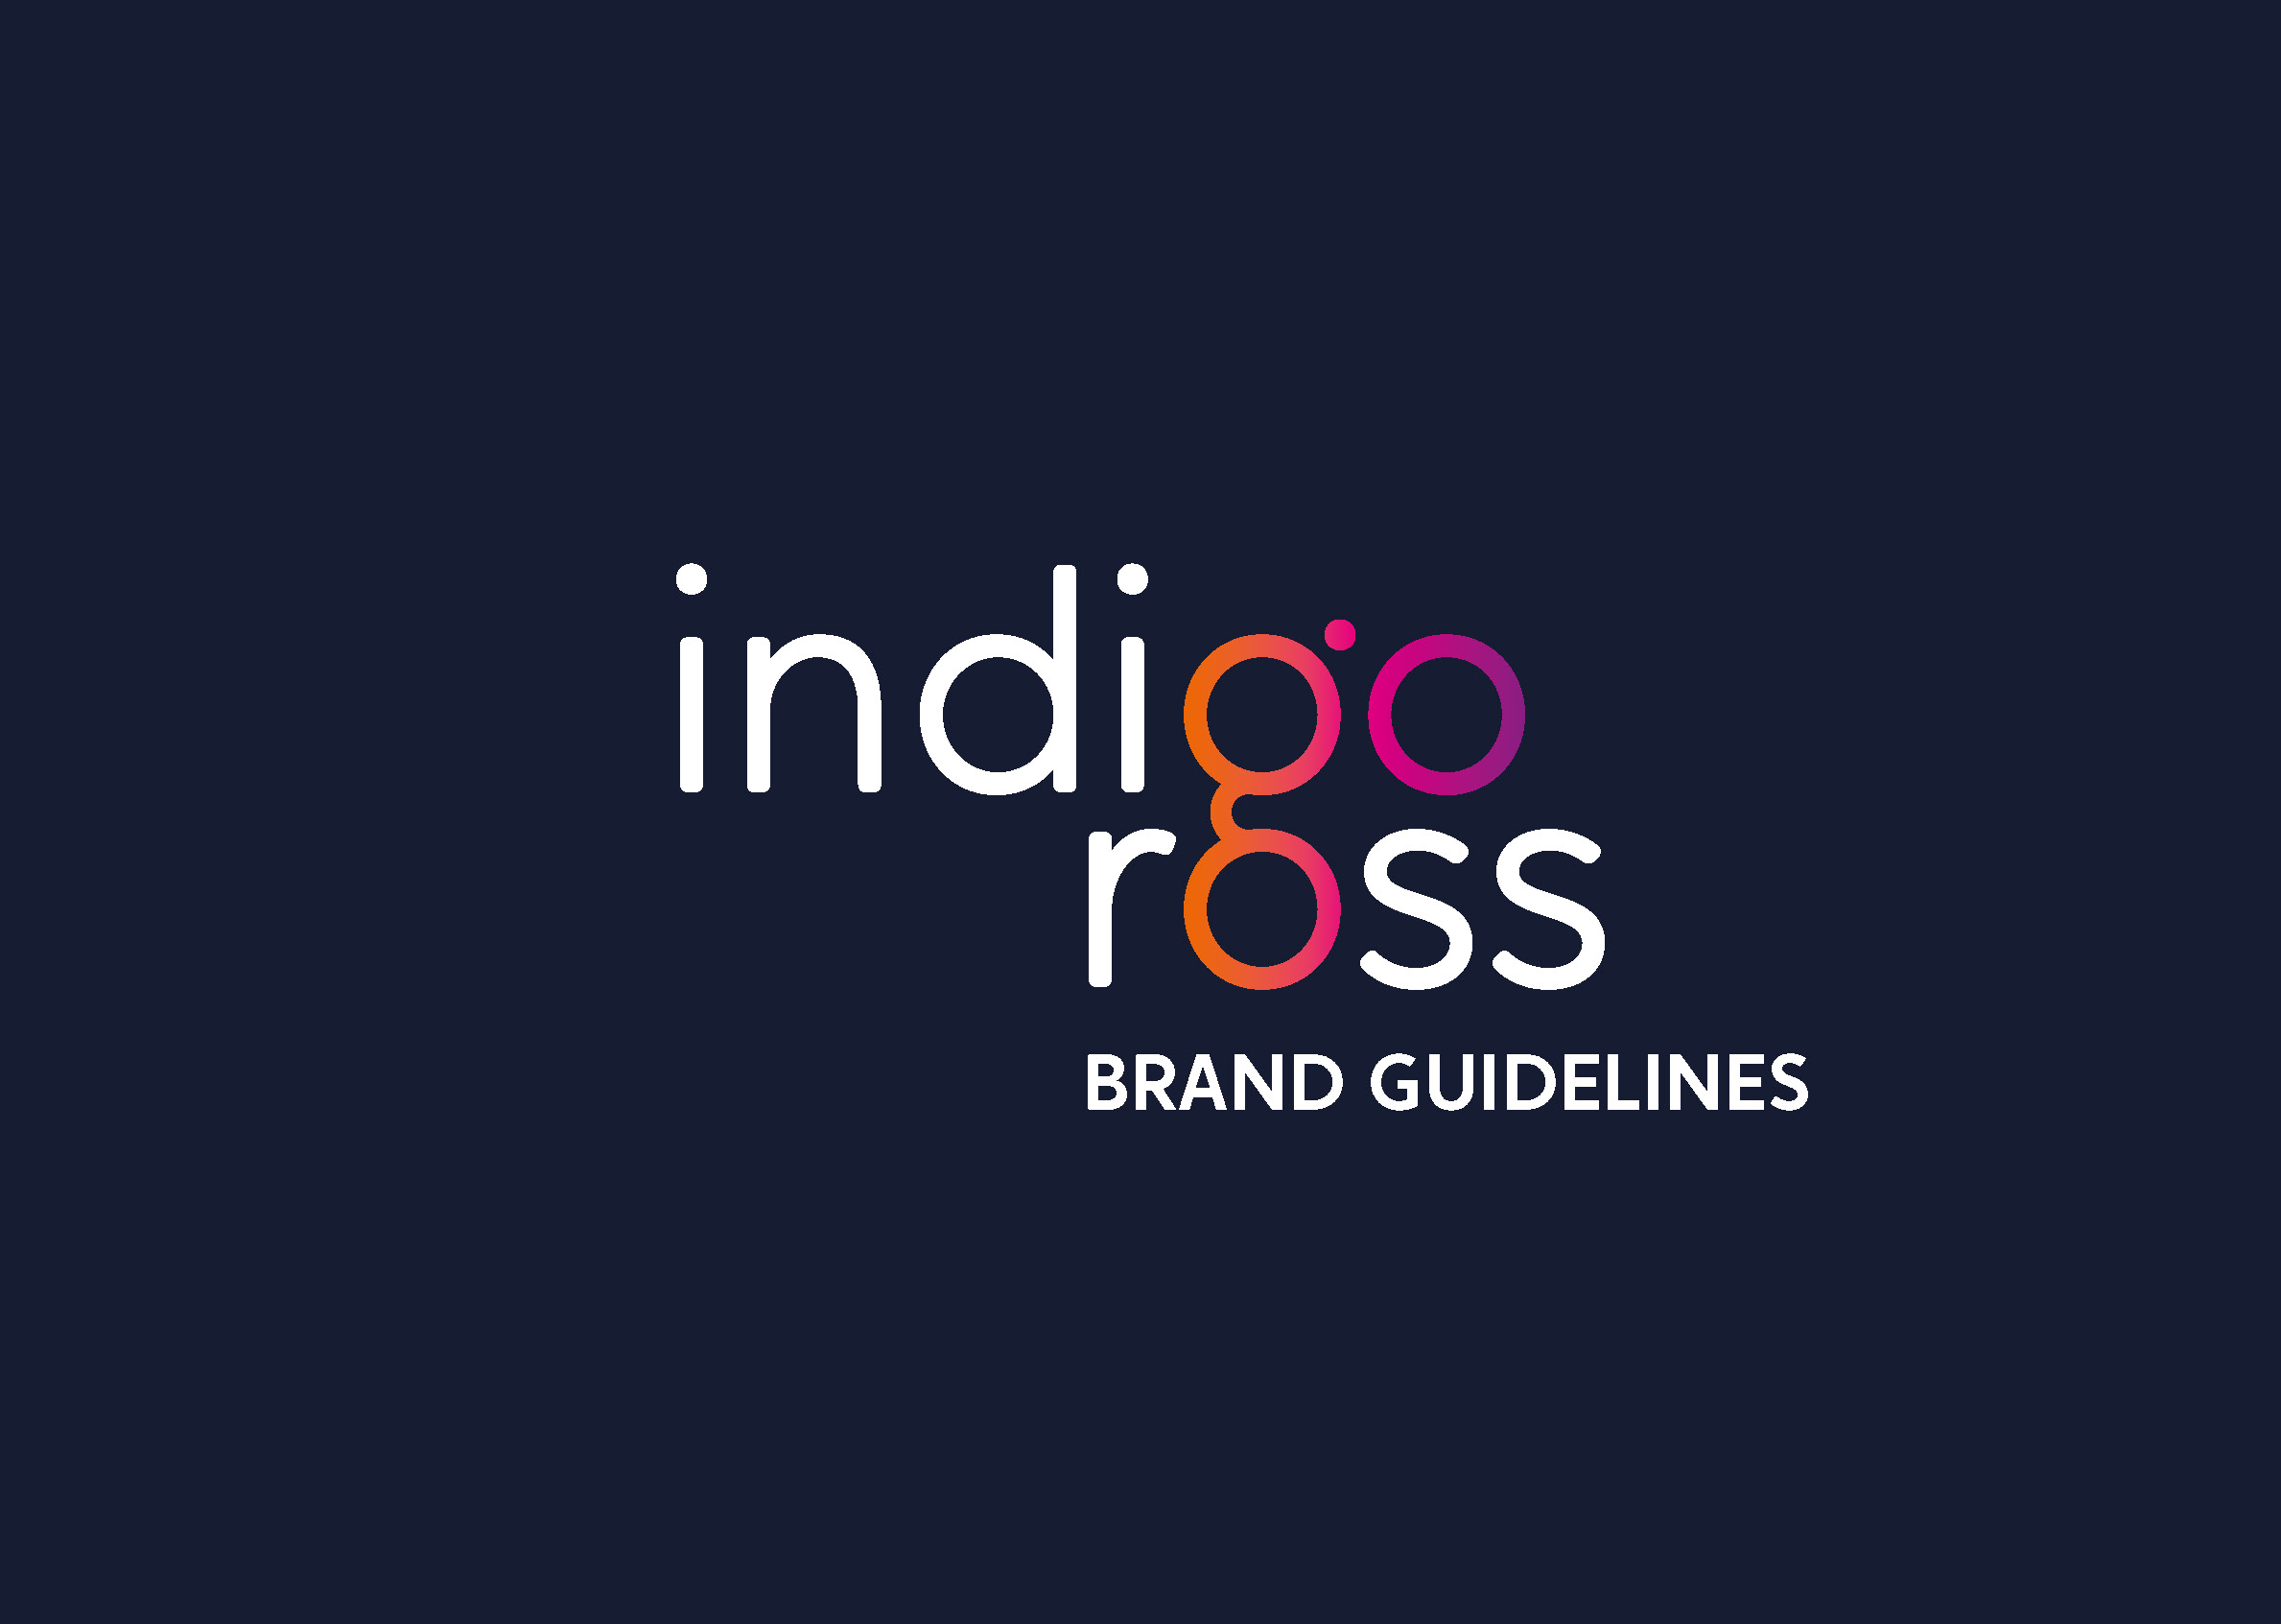 Indigo Ross Brand Guidelines